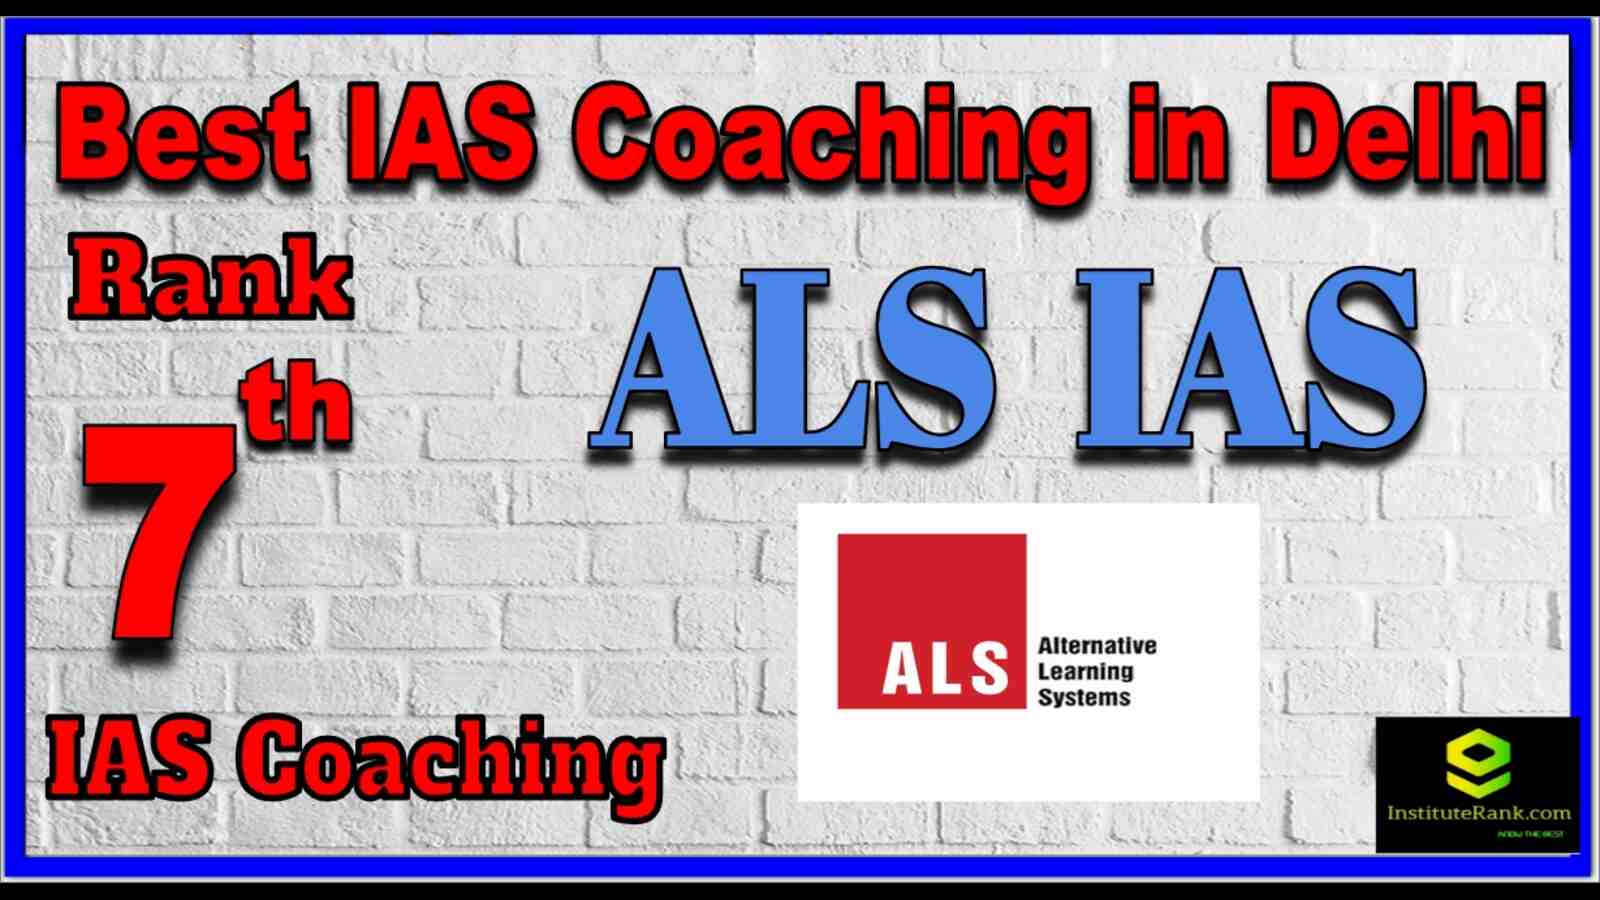 Rank 7th Best IAS Coaching in Delhi